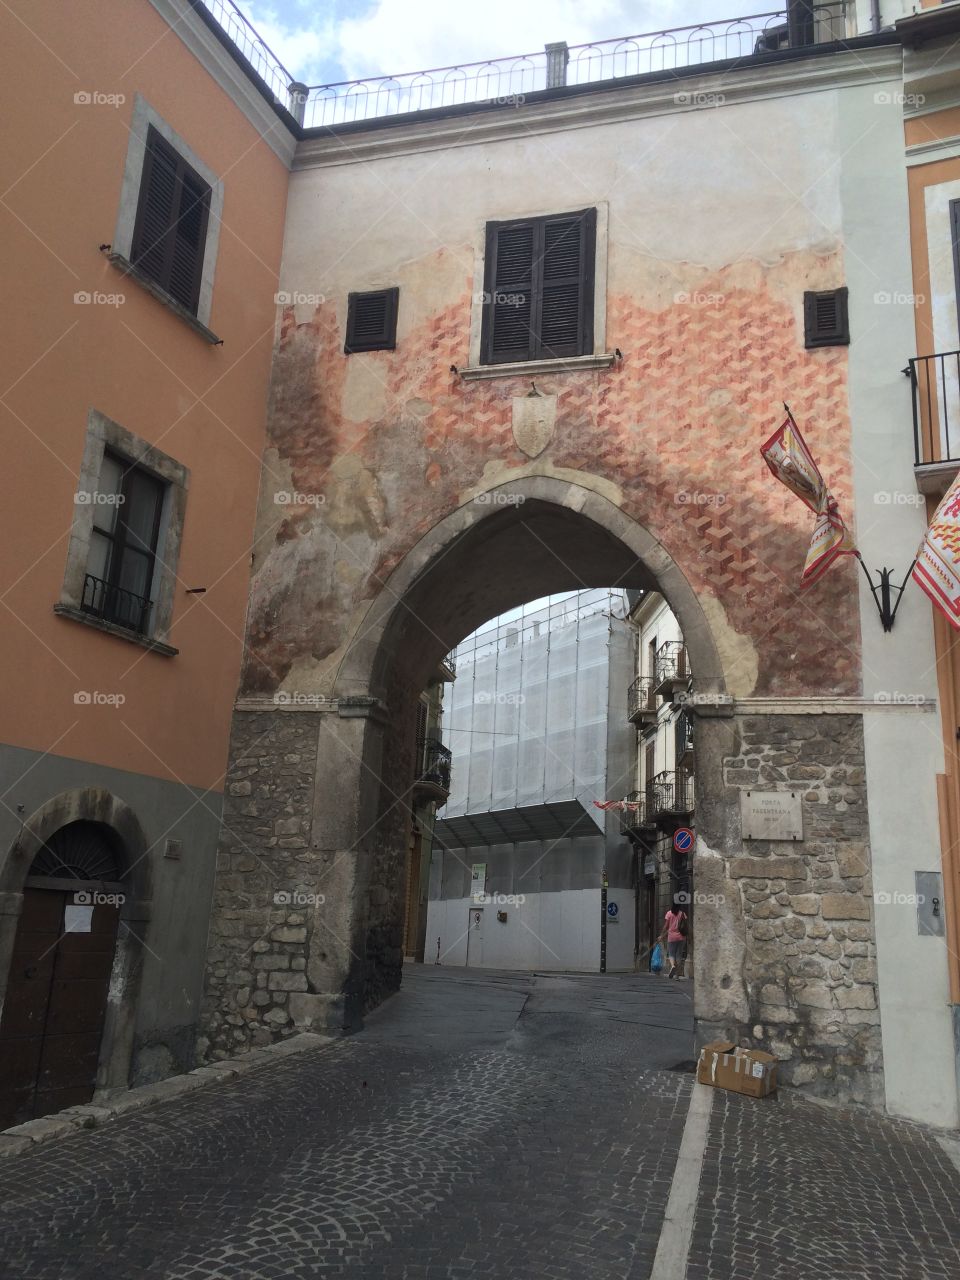 Archway in Sulmona